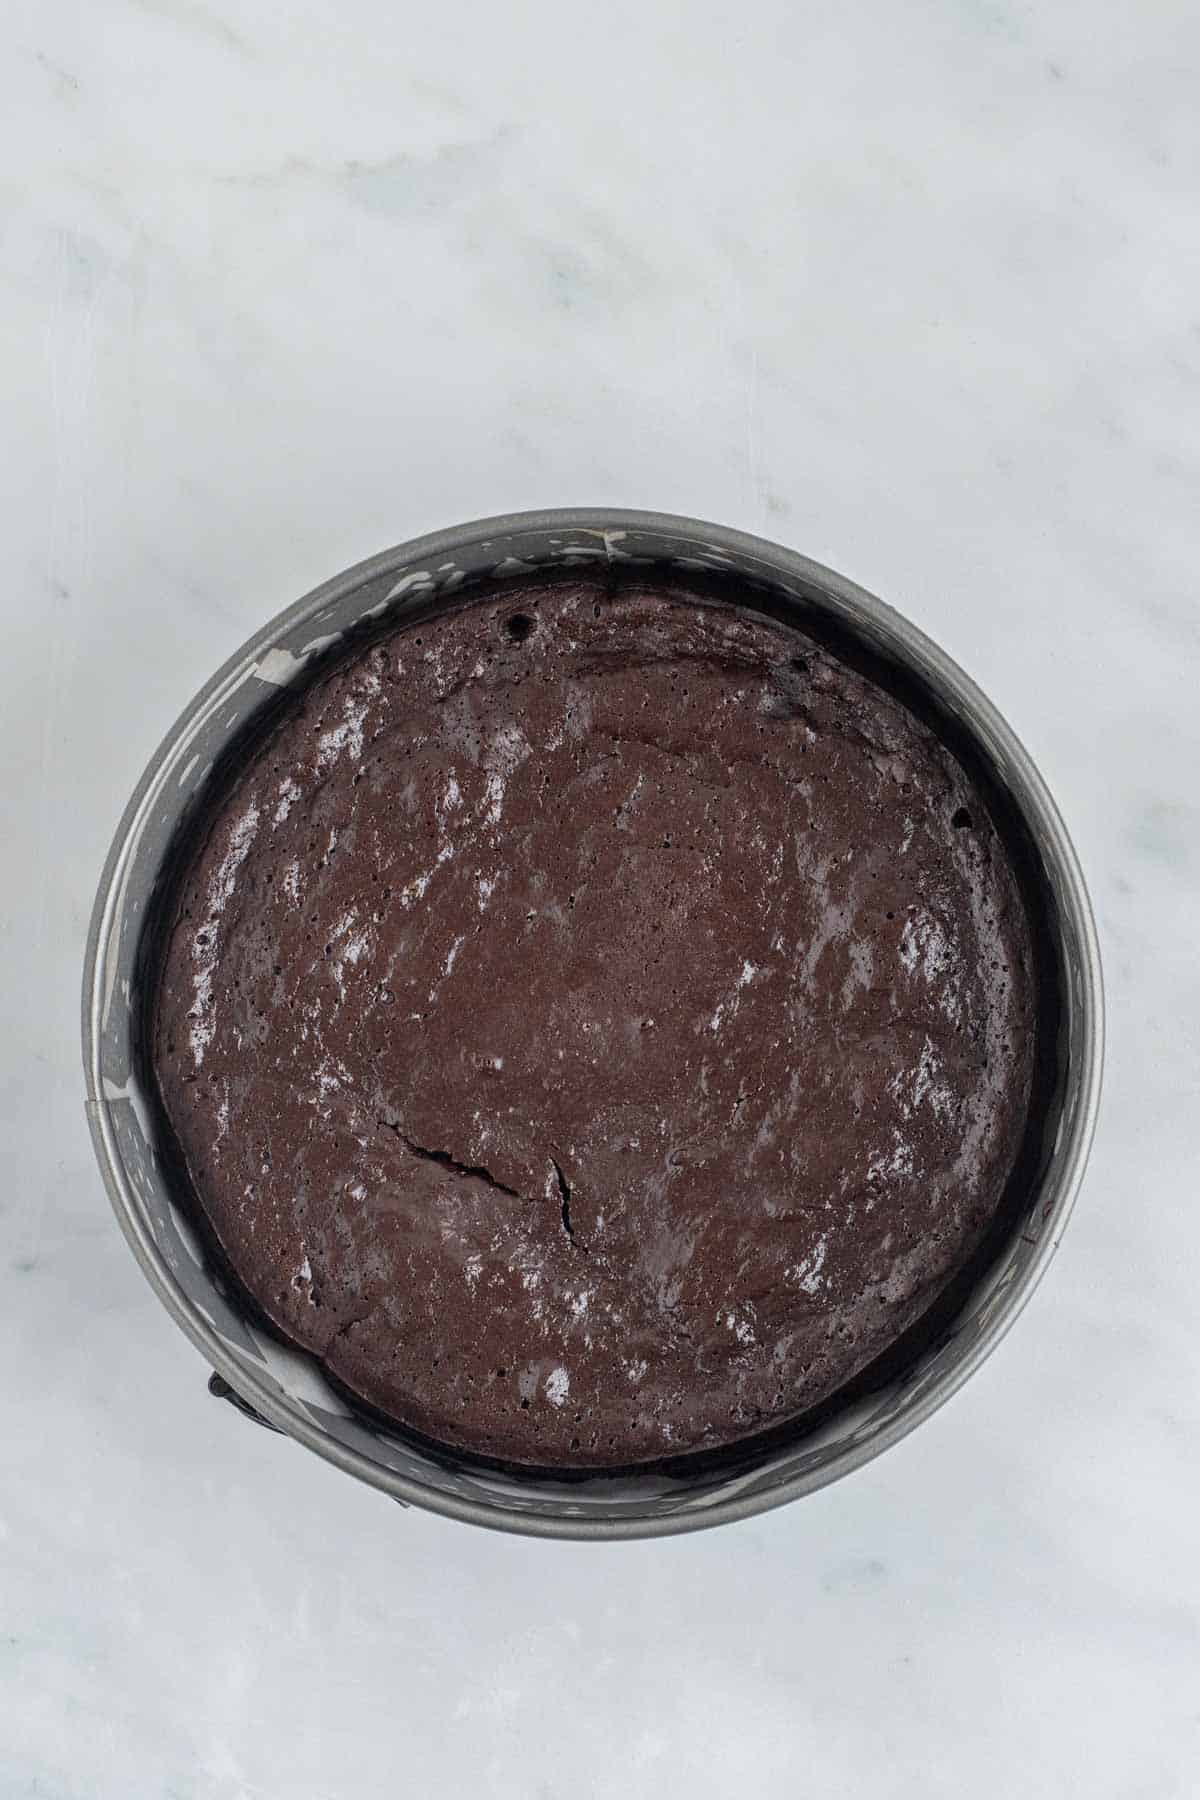 Baked chocolate torte inside a round springform pan.